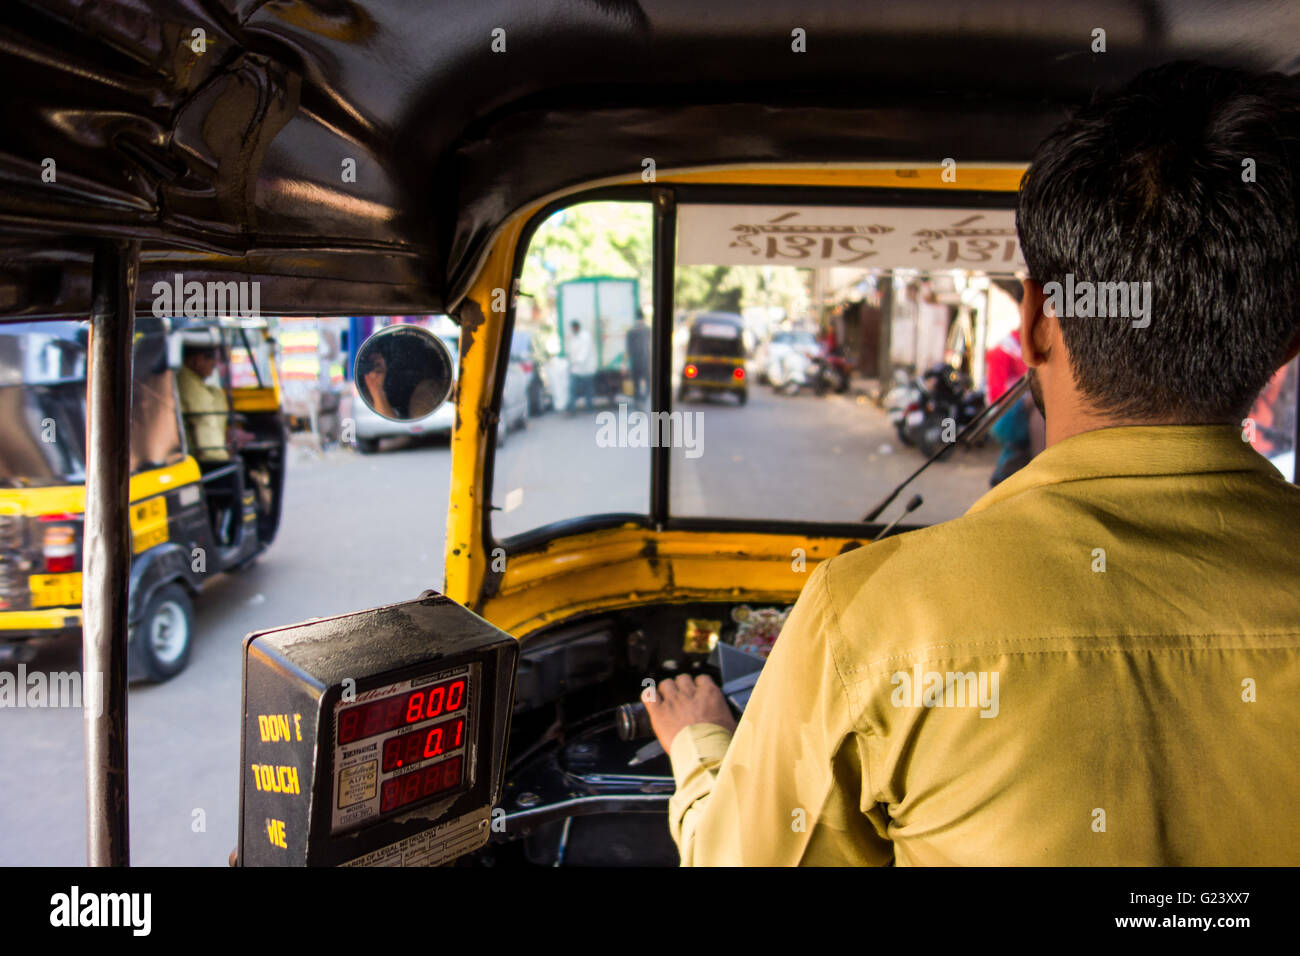 Inside an auto rickshaw in Mumbai, India Stock Photo